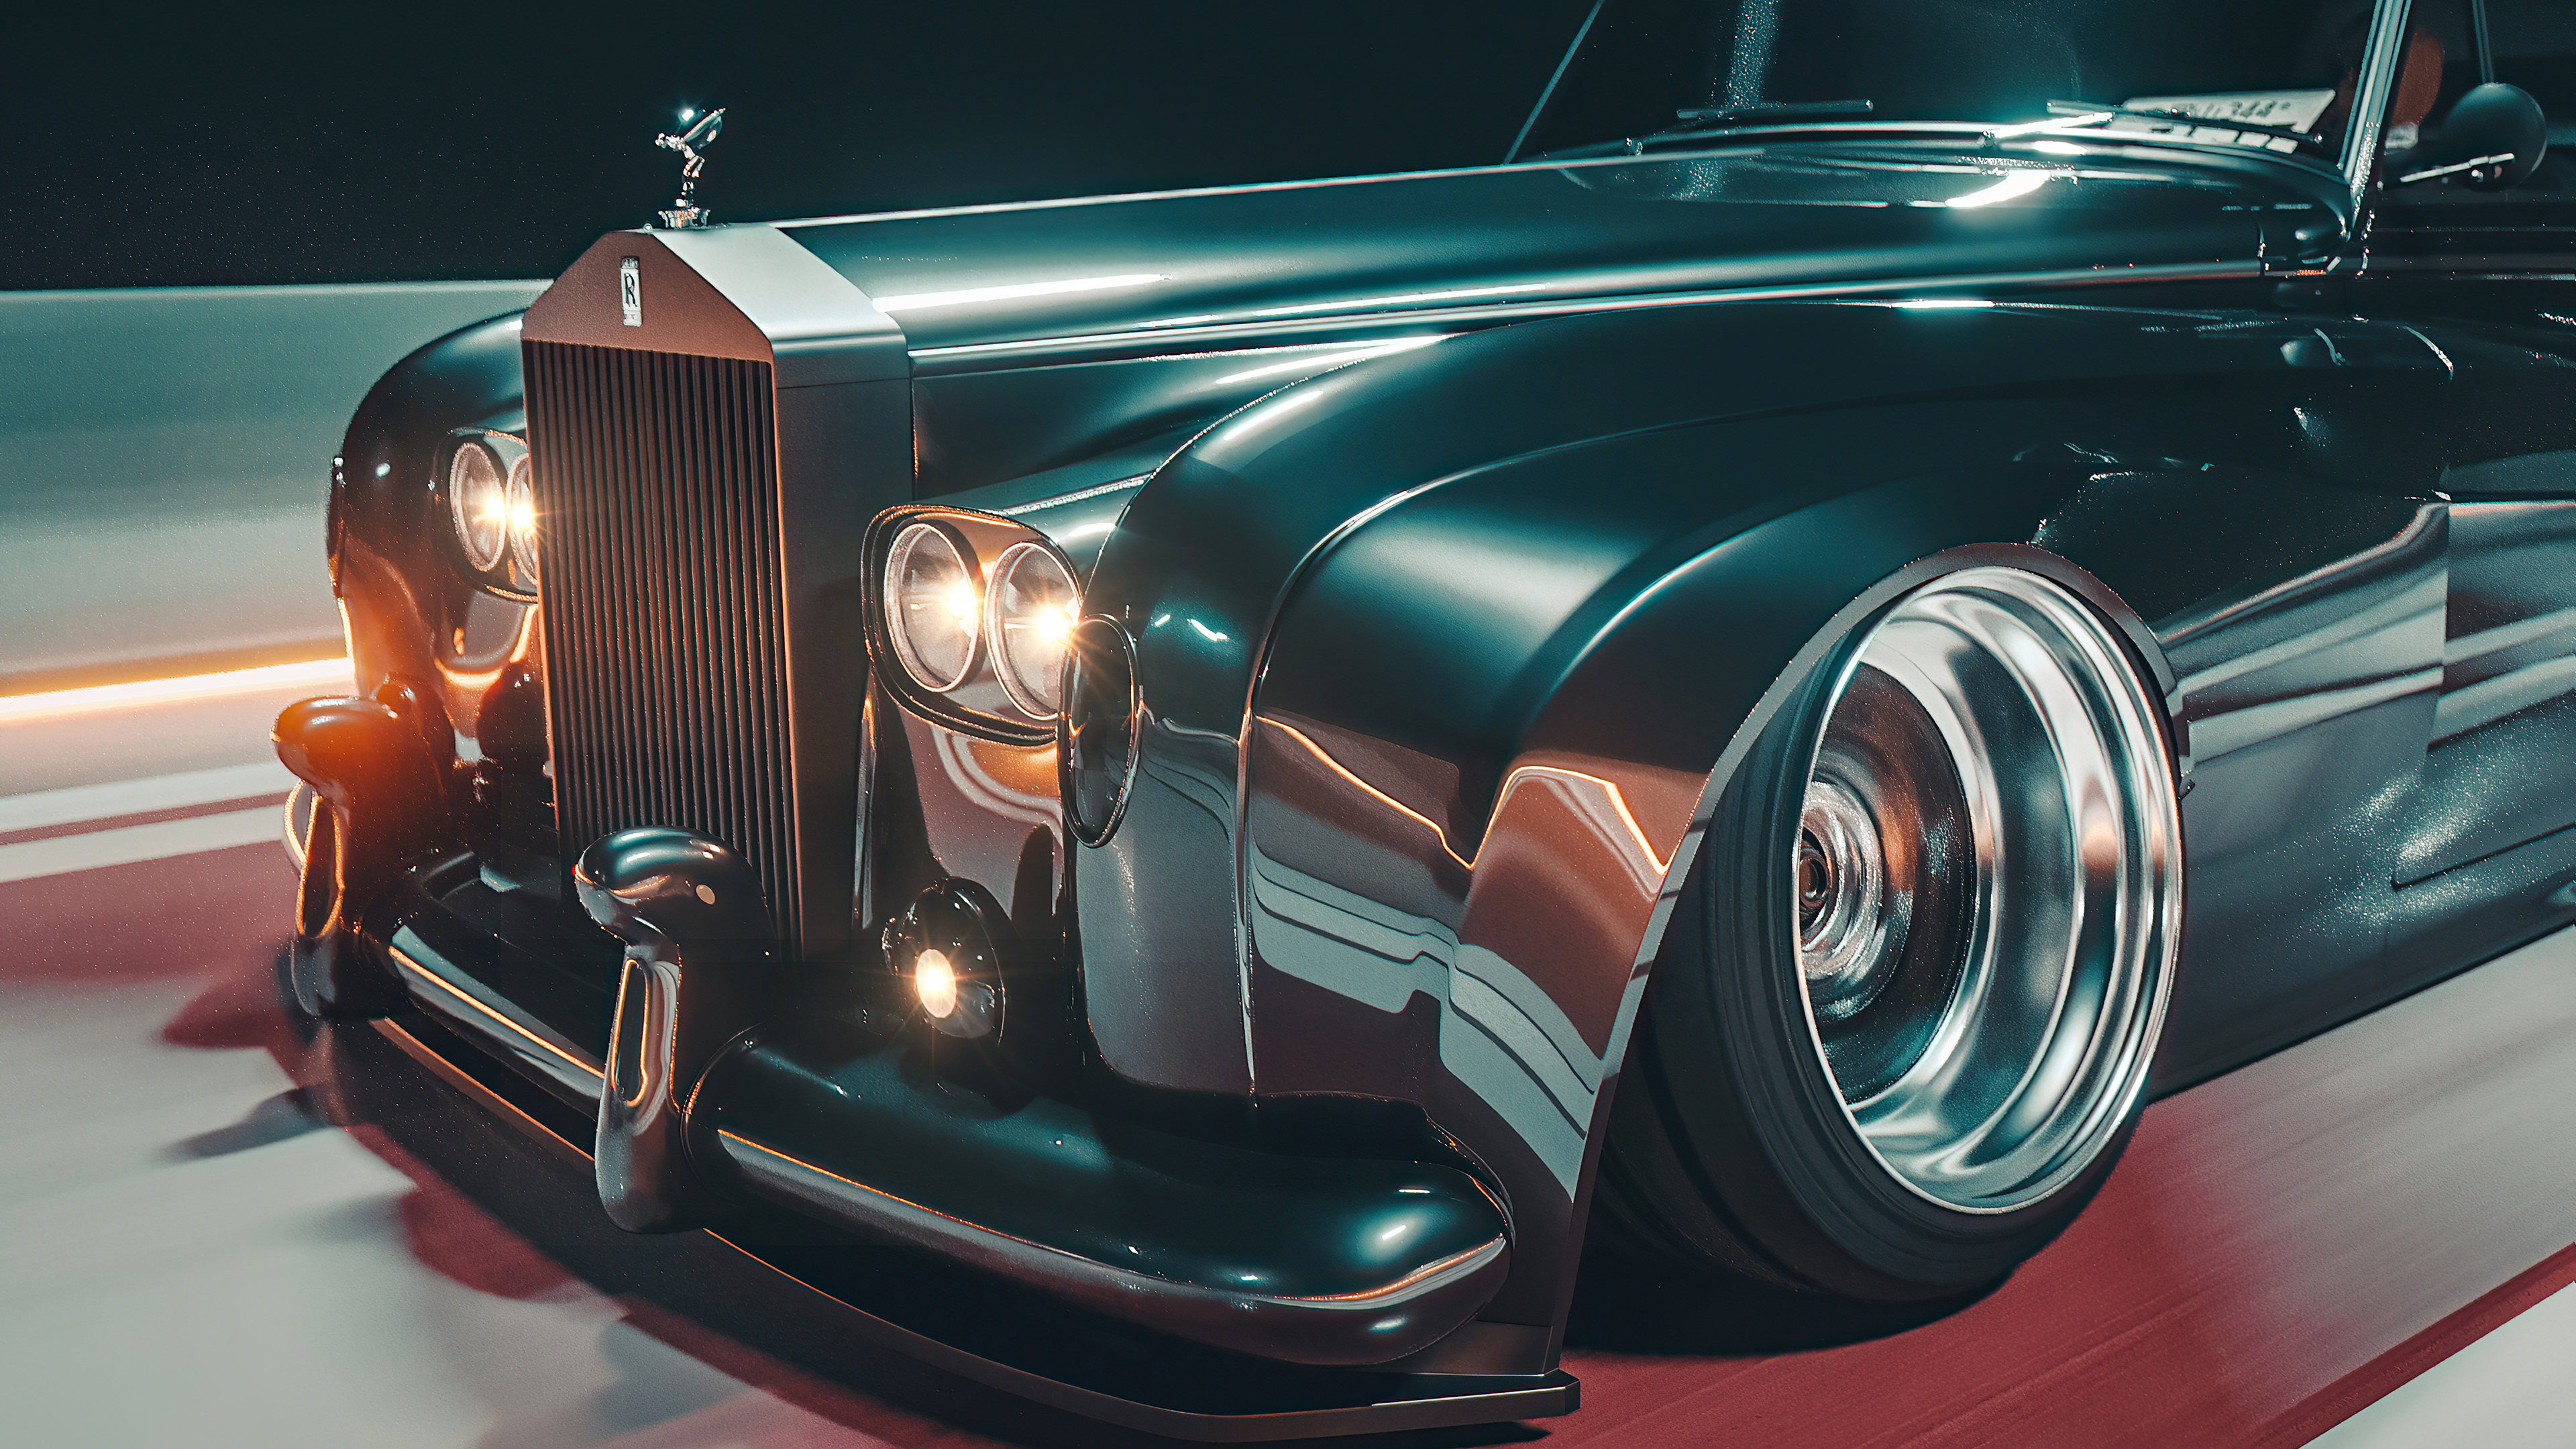 WOW 1956 Rolls Royce vintage limo rental for weddings